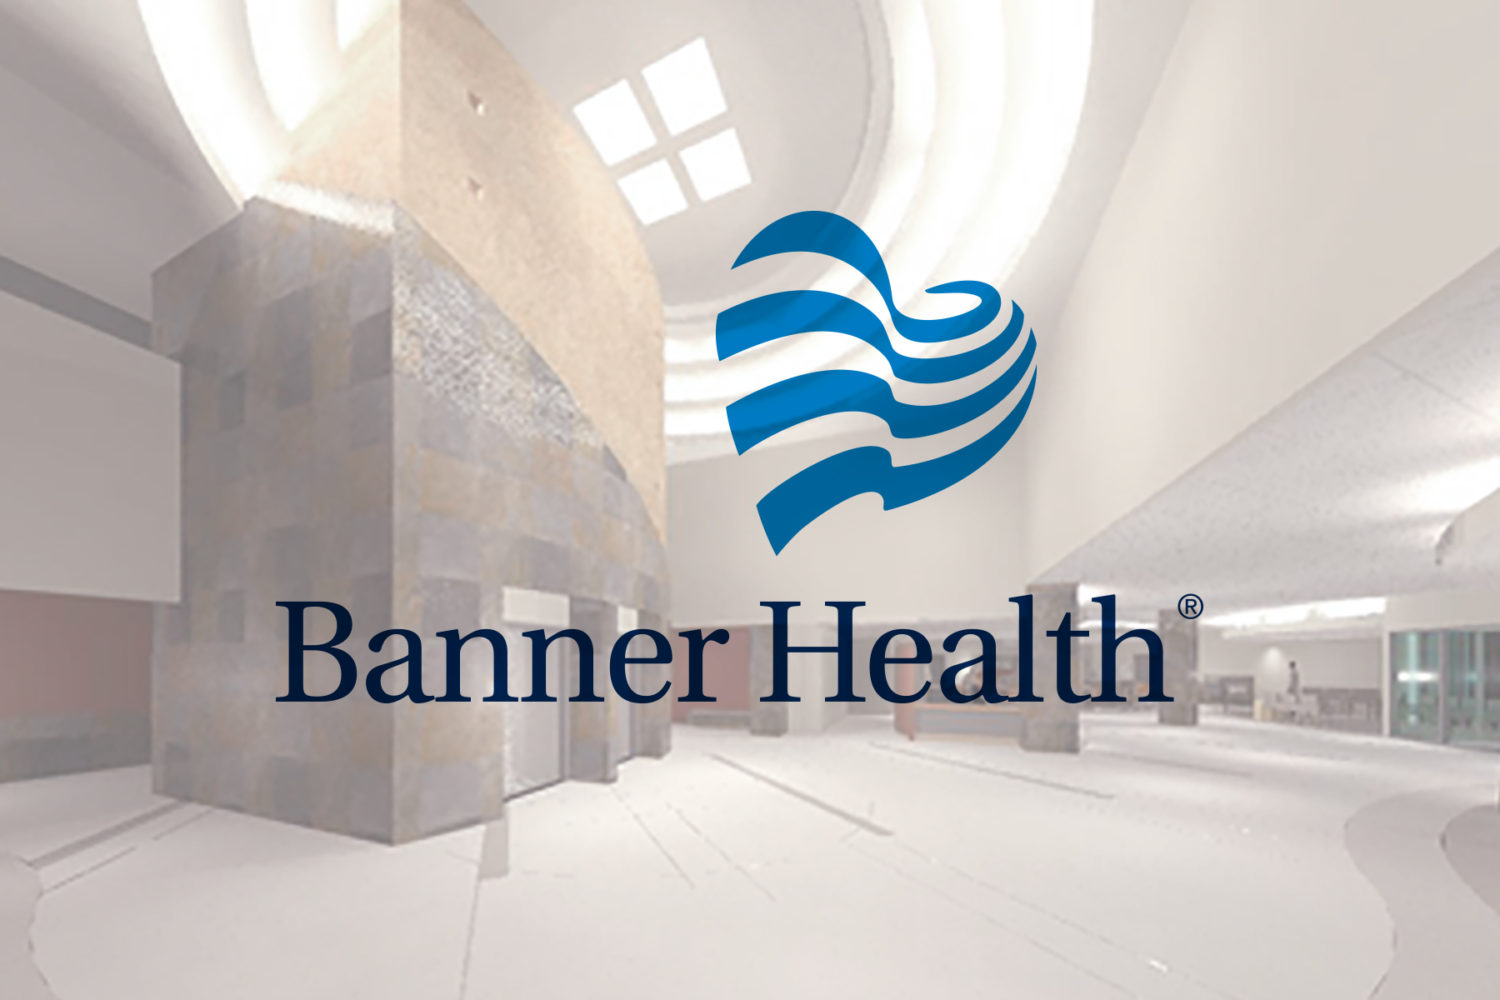 Banner Health to Implement Cerner Revenue Cycle Management Across Enterprise